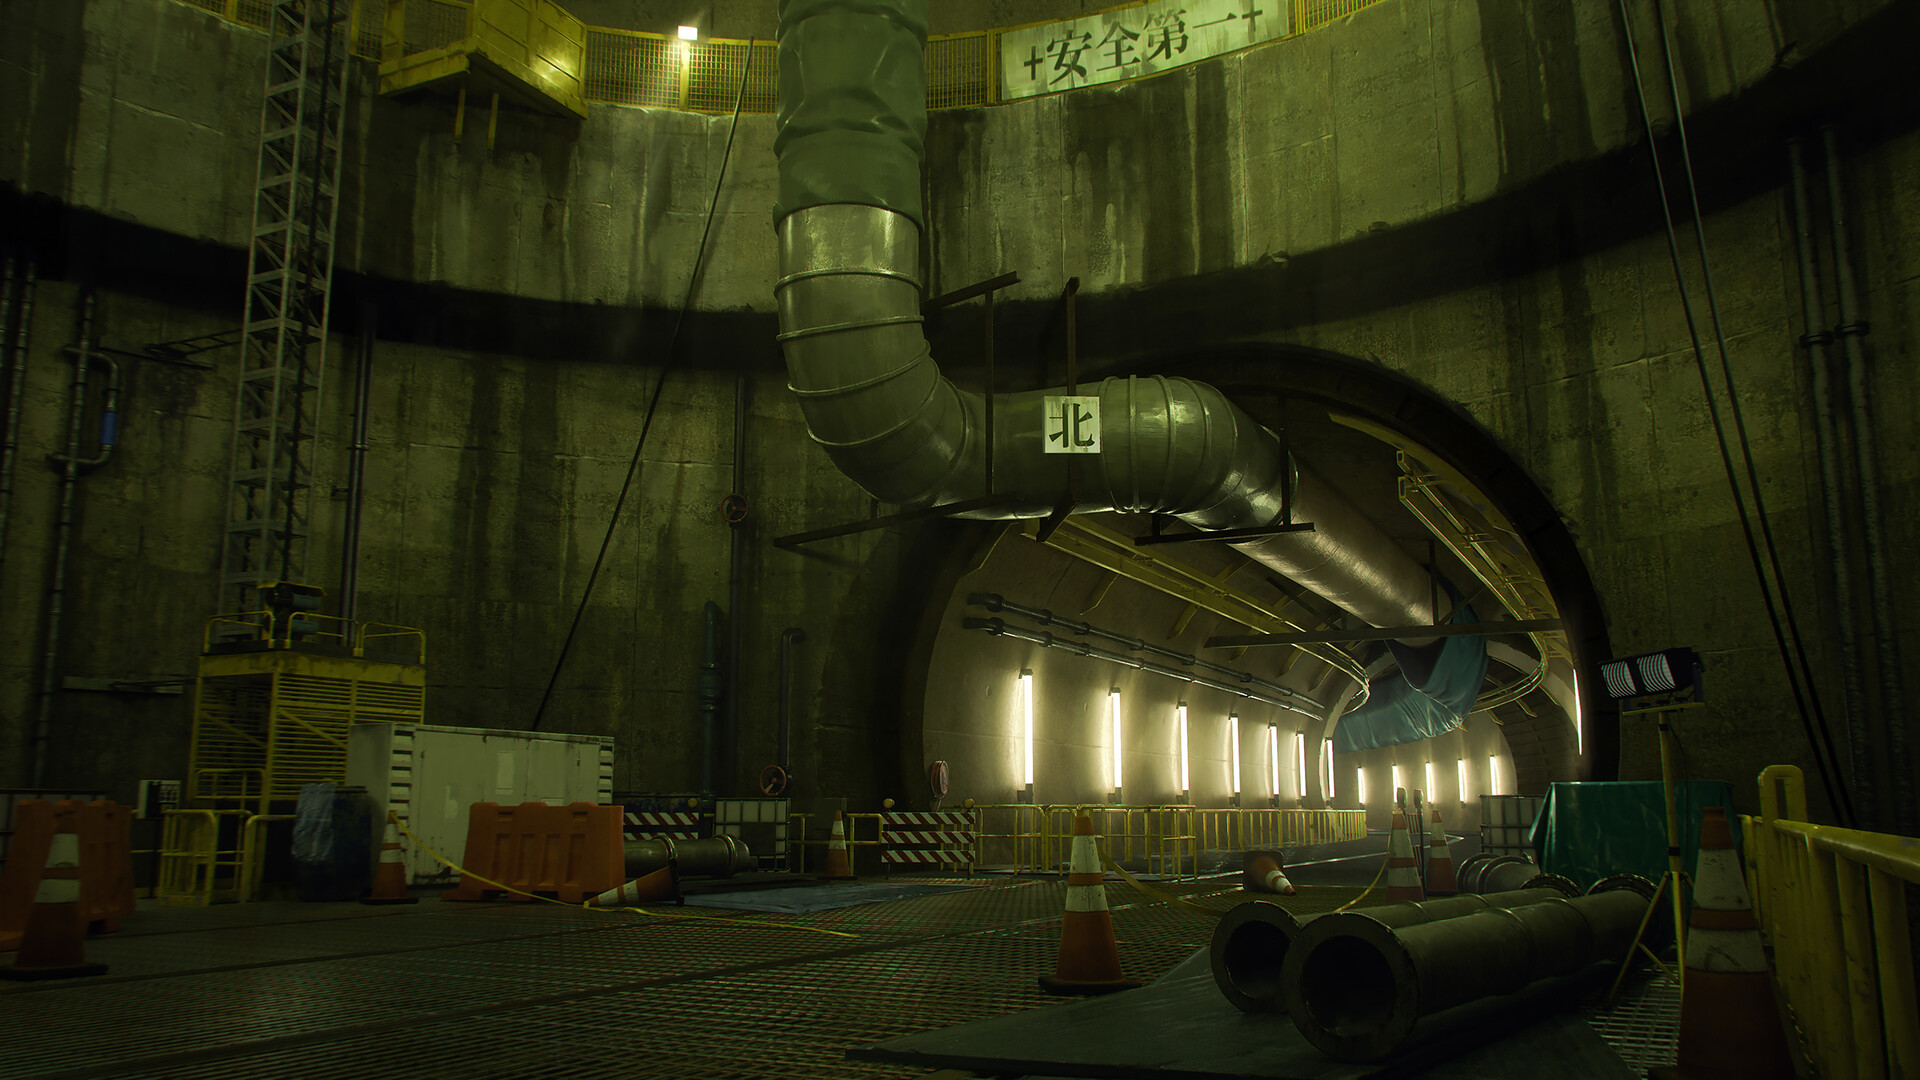 ArtStation - Tokyo sewer